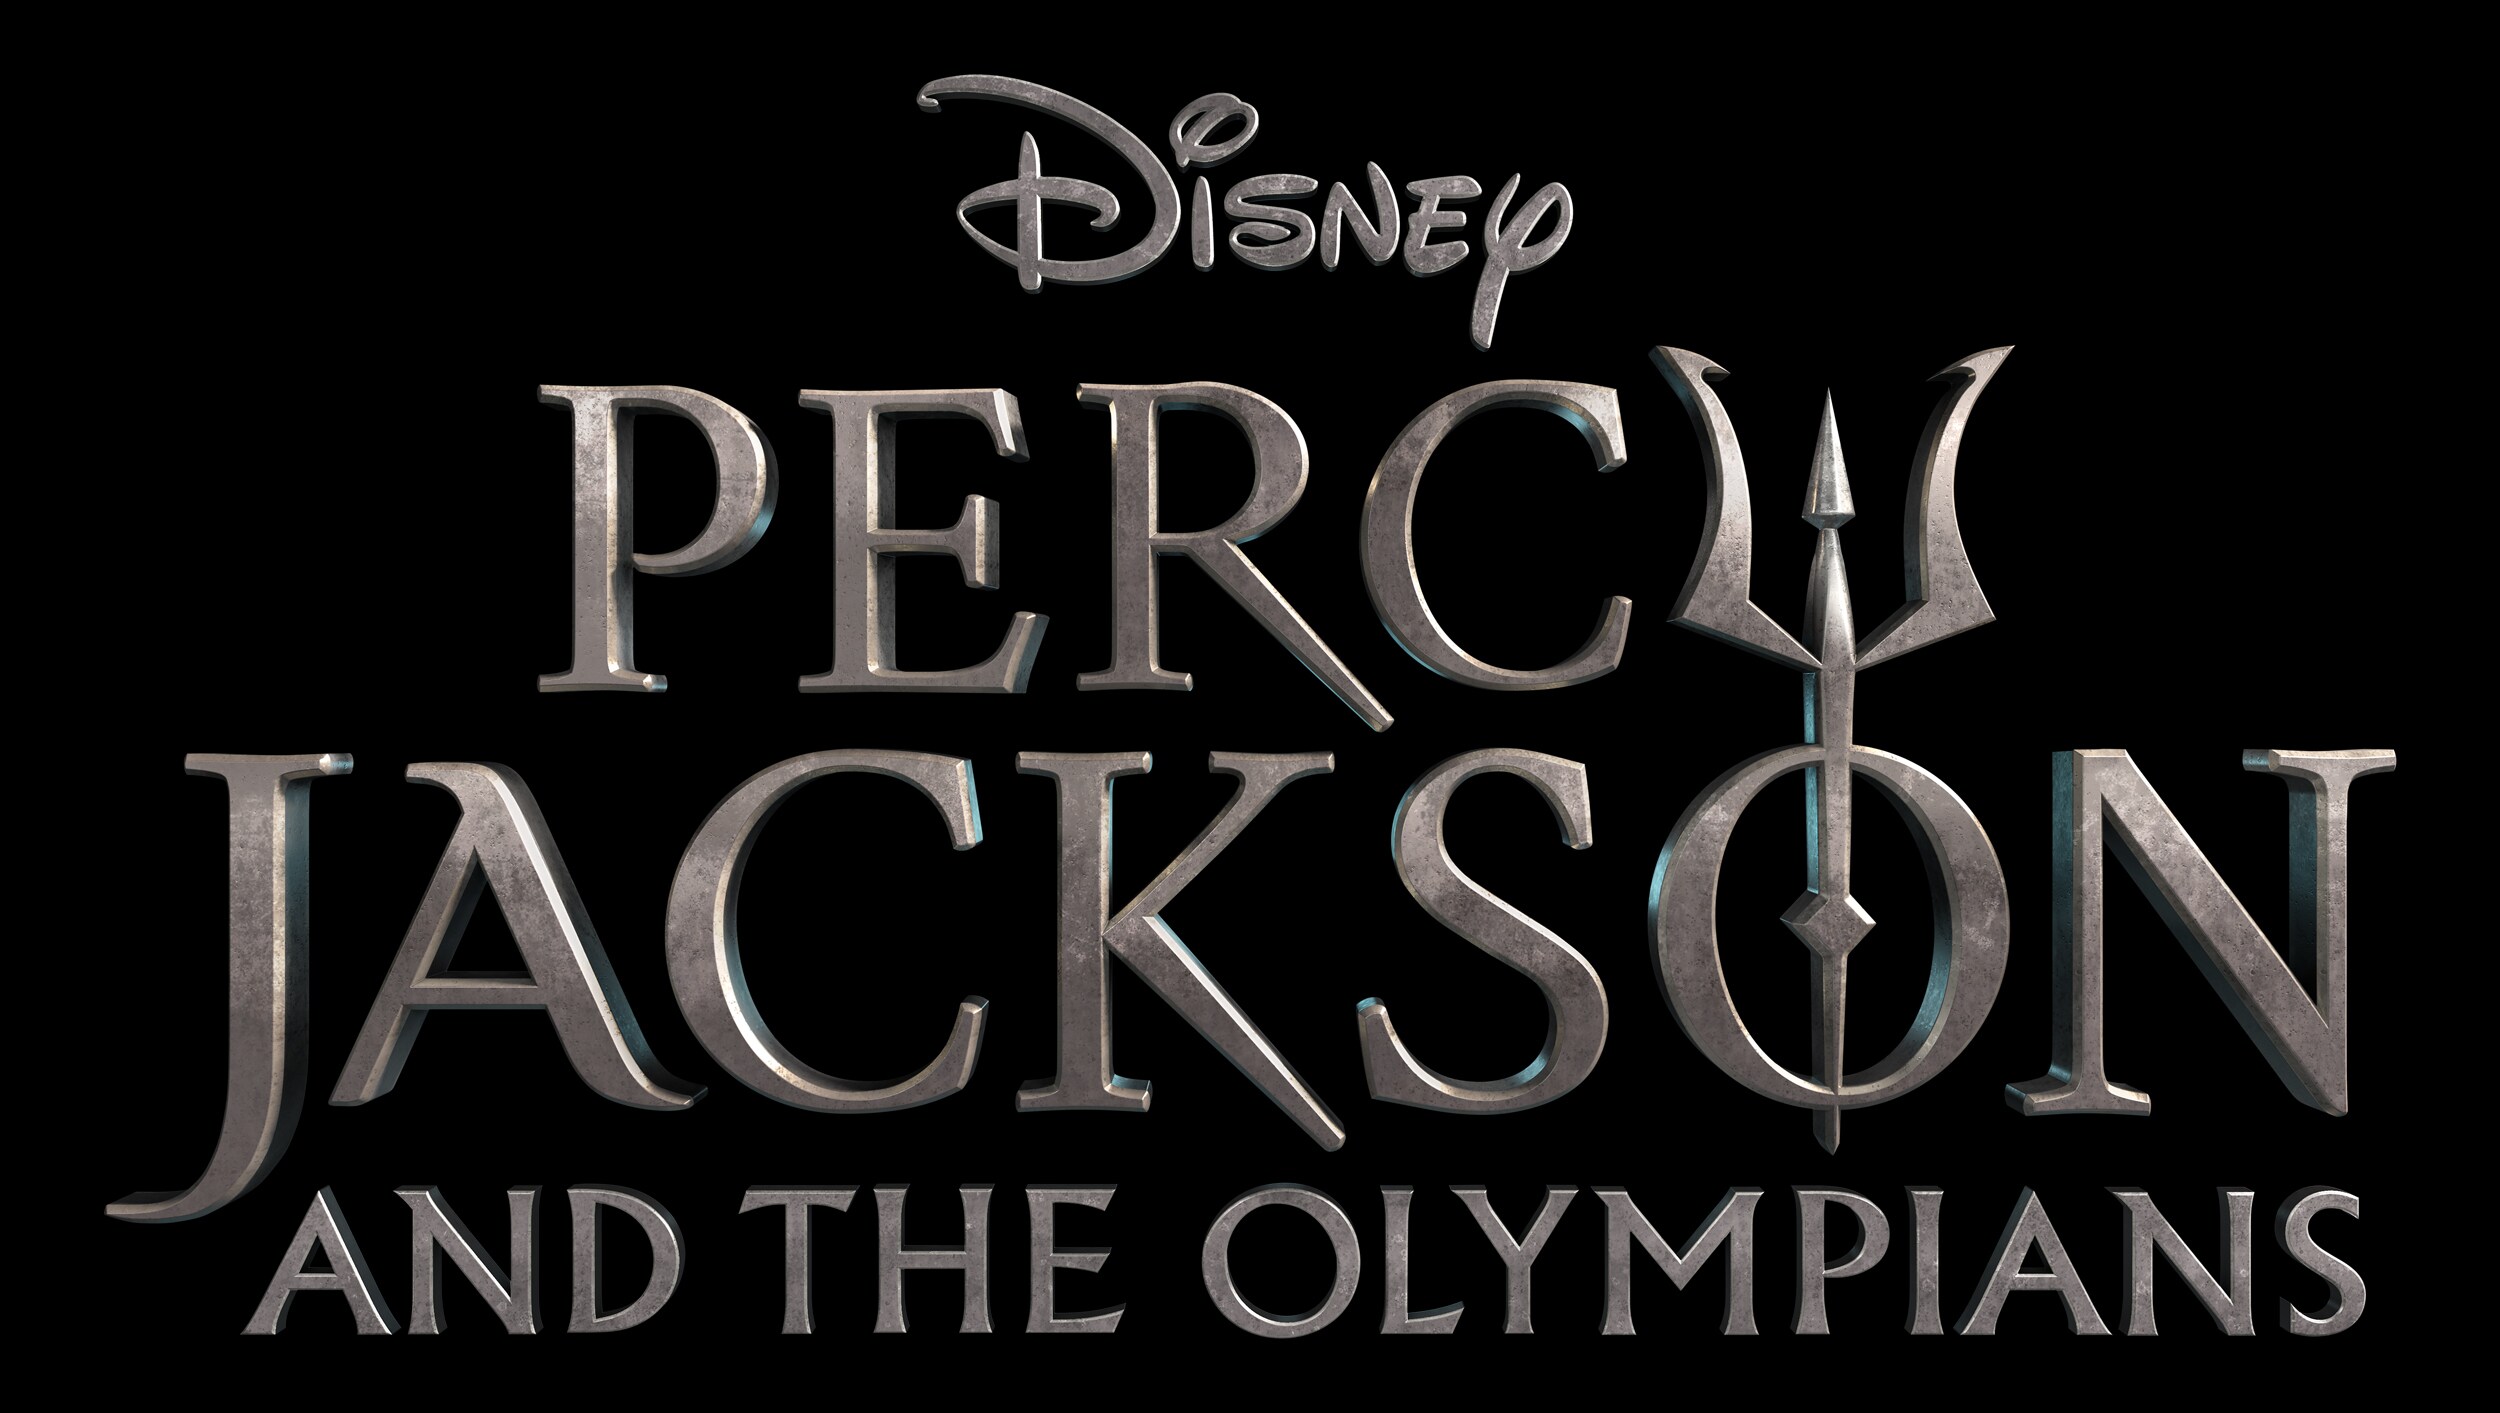 percy jackson and the olympians symbol